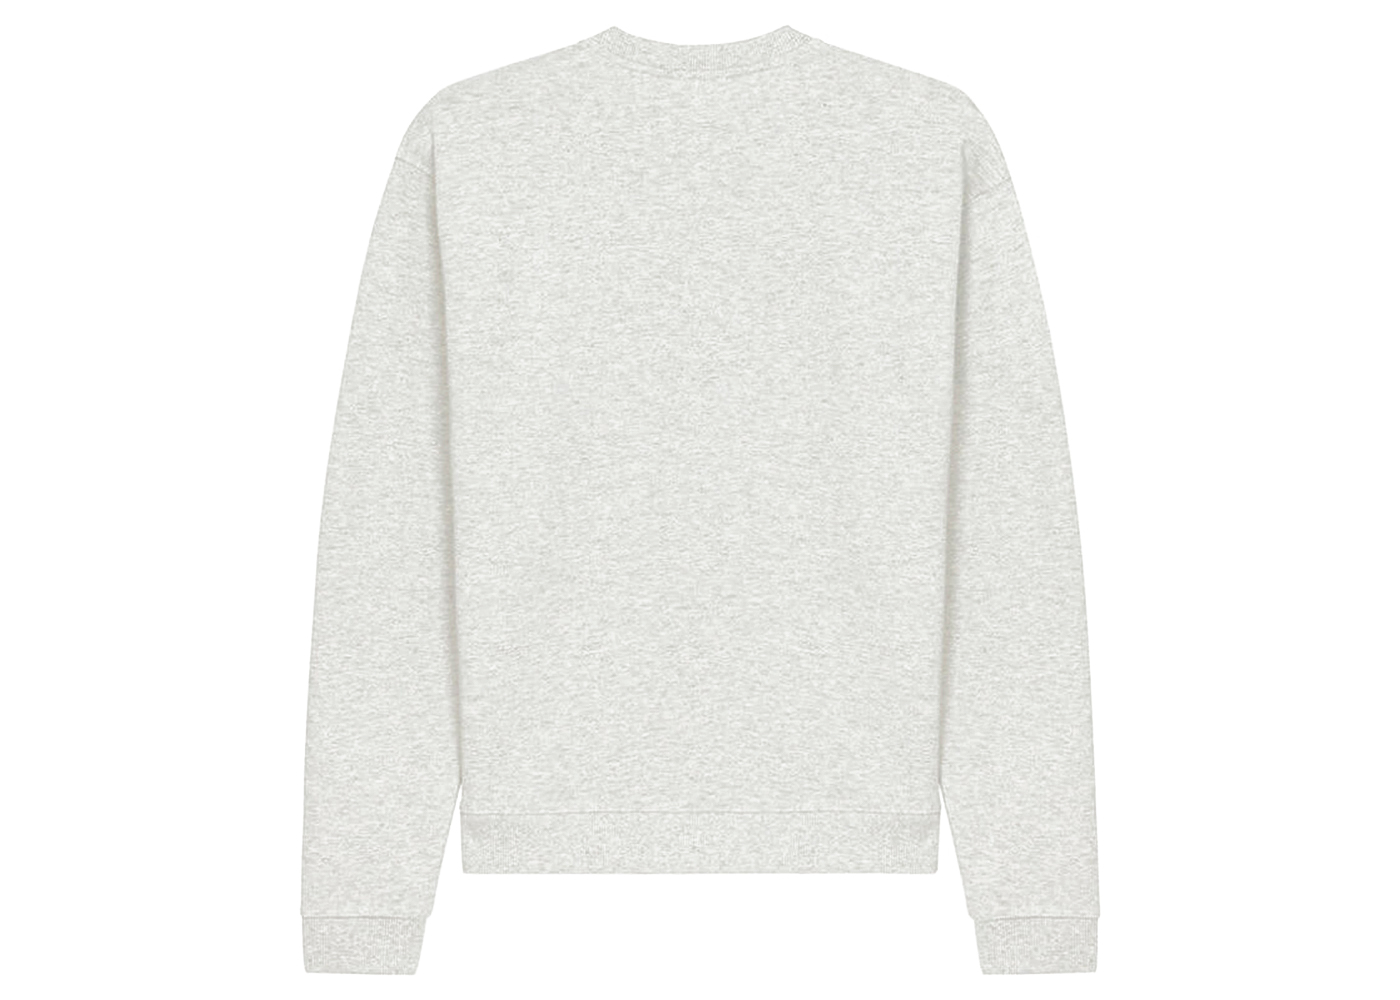 KENZO x Nigo Boke Flower Crest Sweatshirt Grey